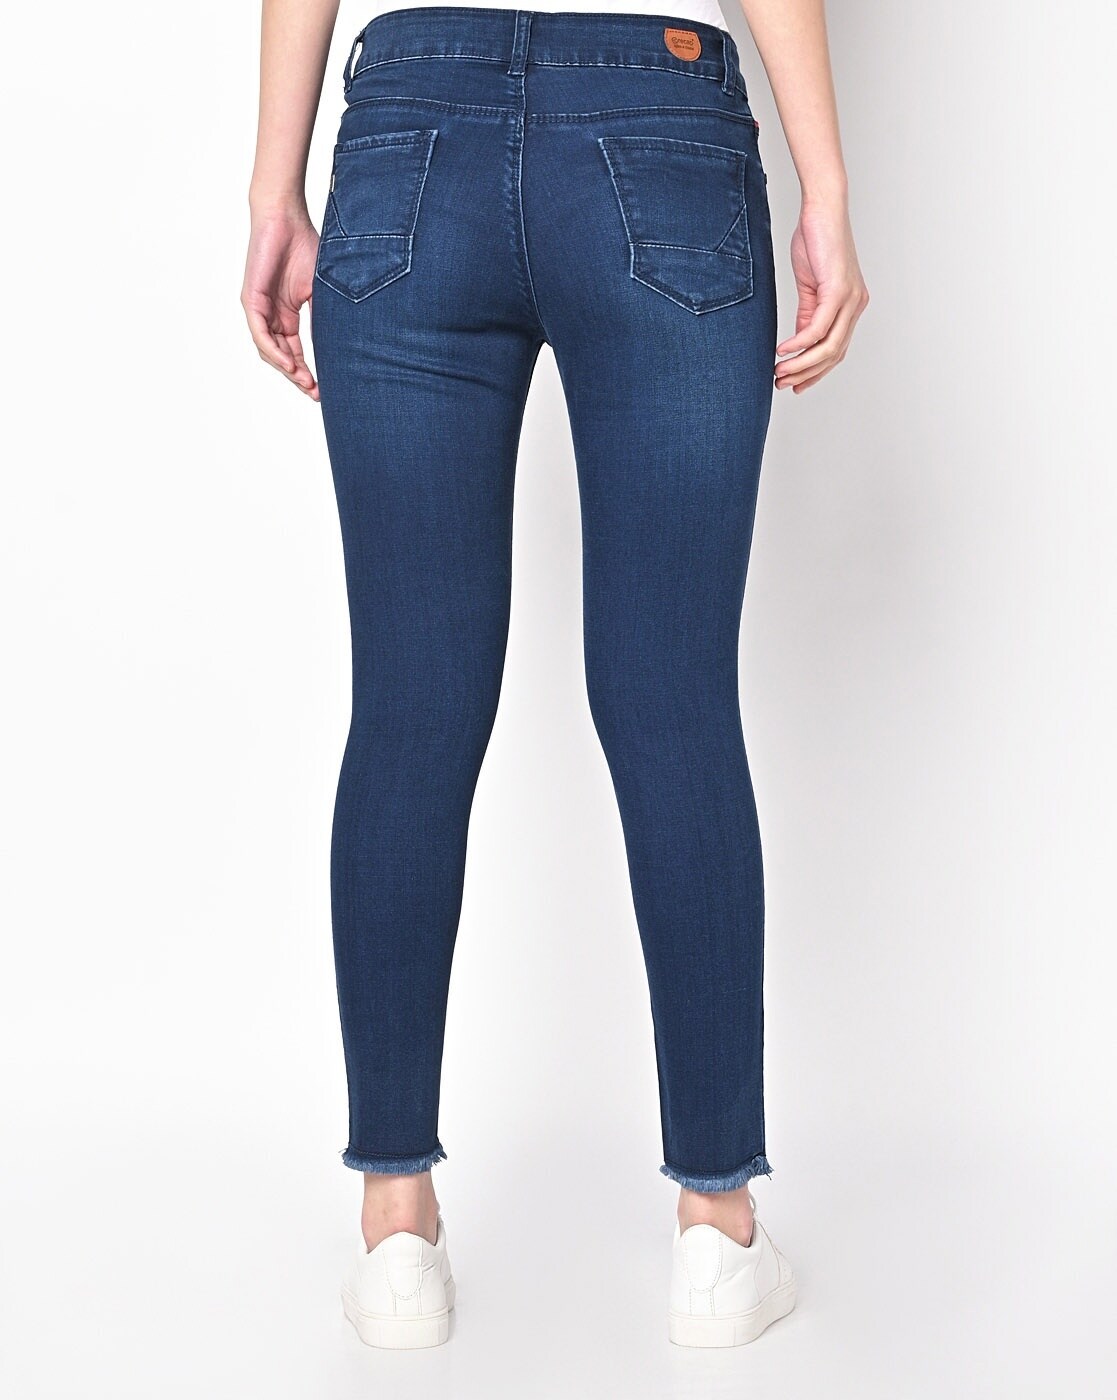 Dolce & Gabbana Cobalt Blue Stripes Skinny Denim Cotton Jeans | eBay